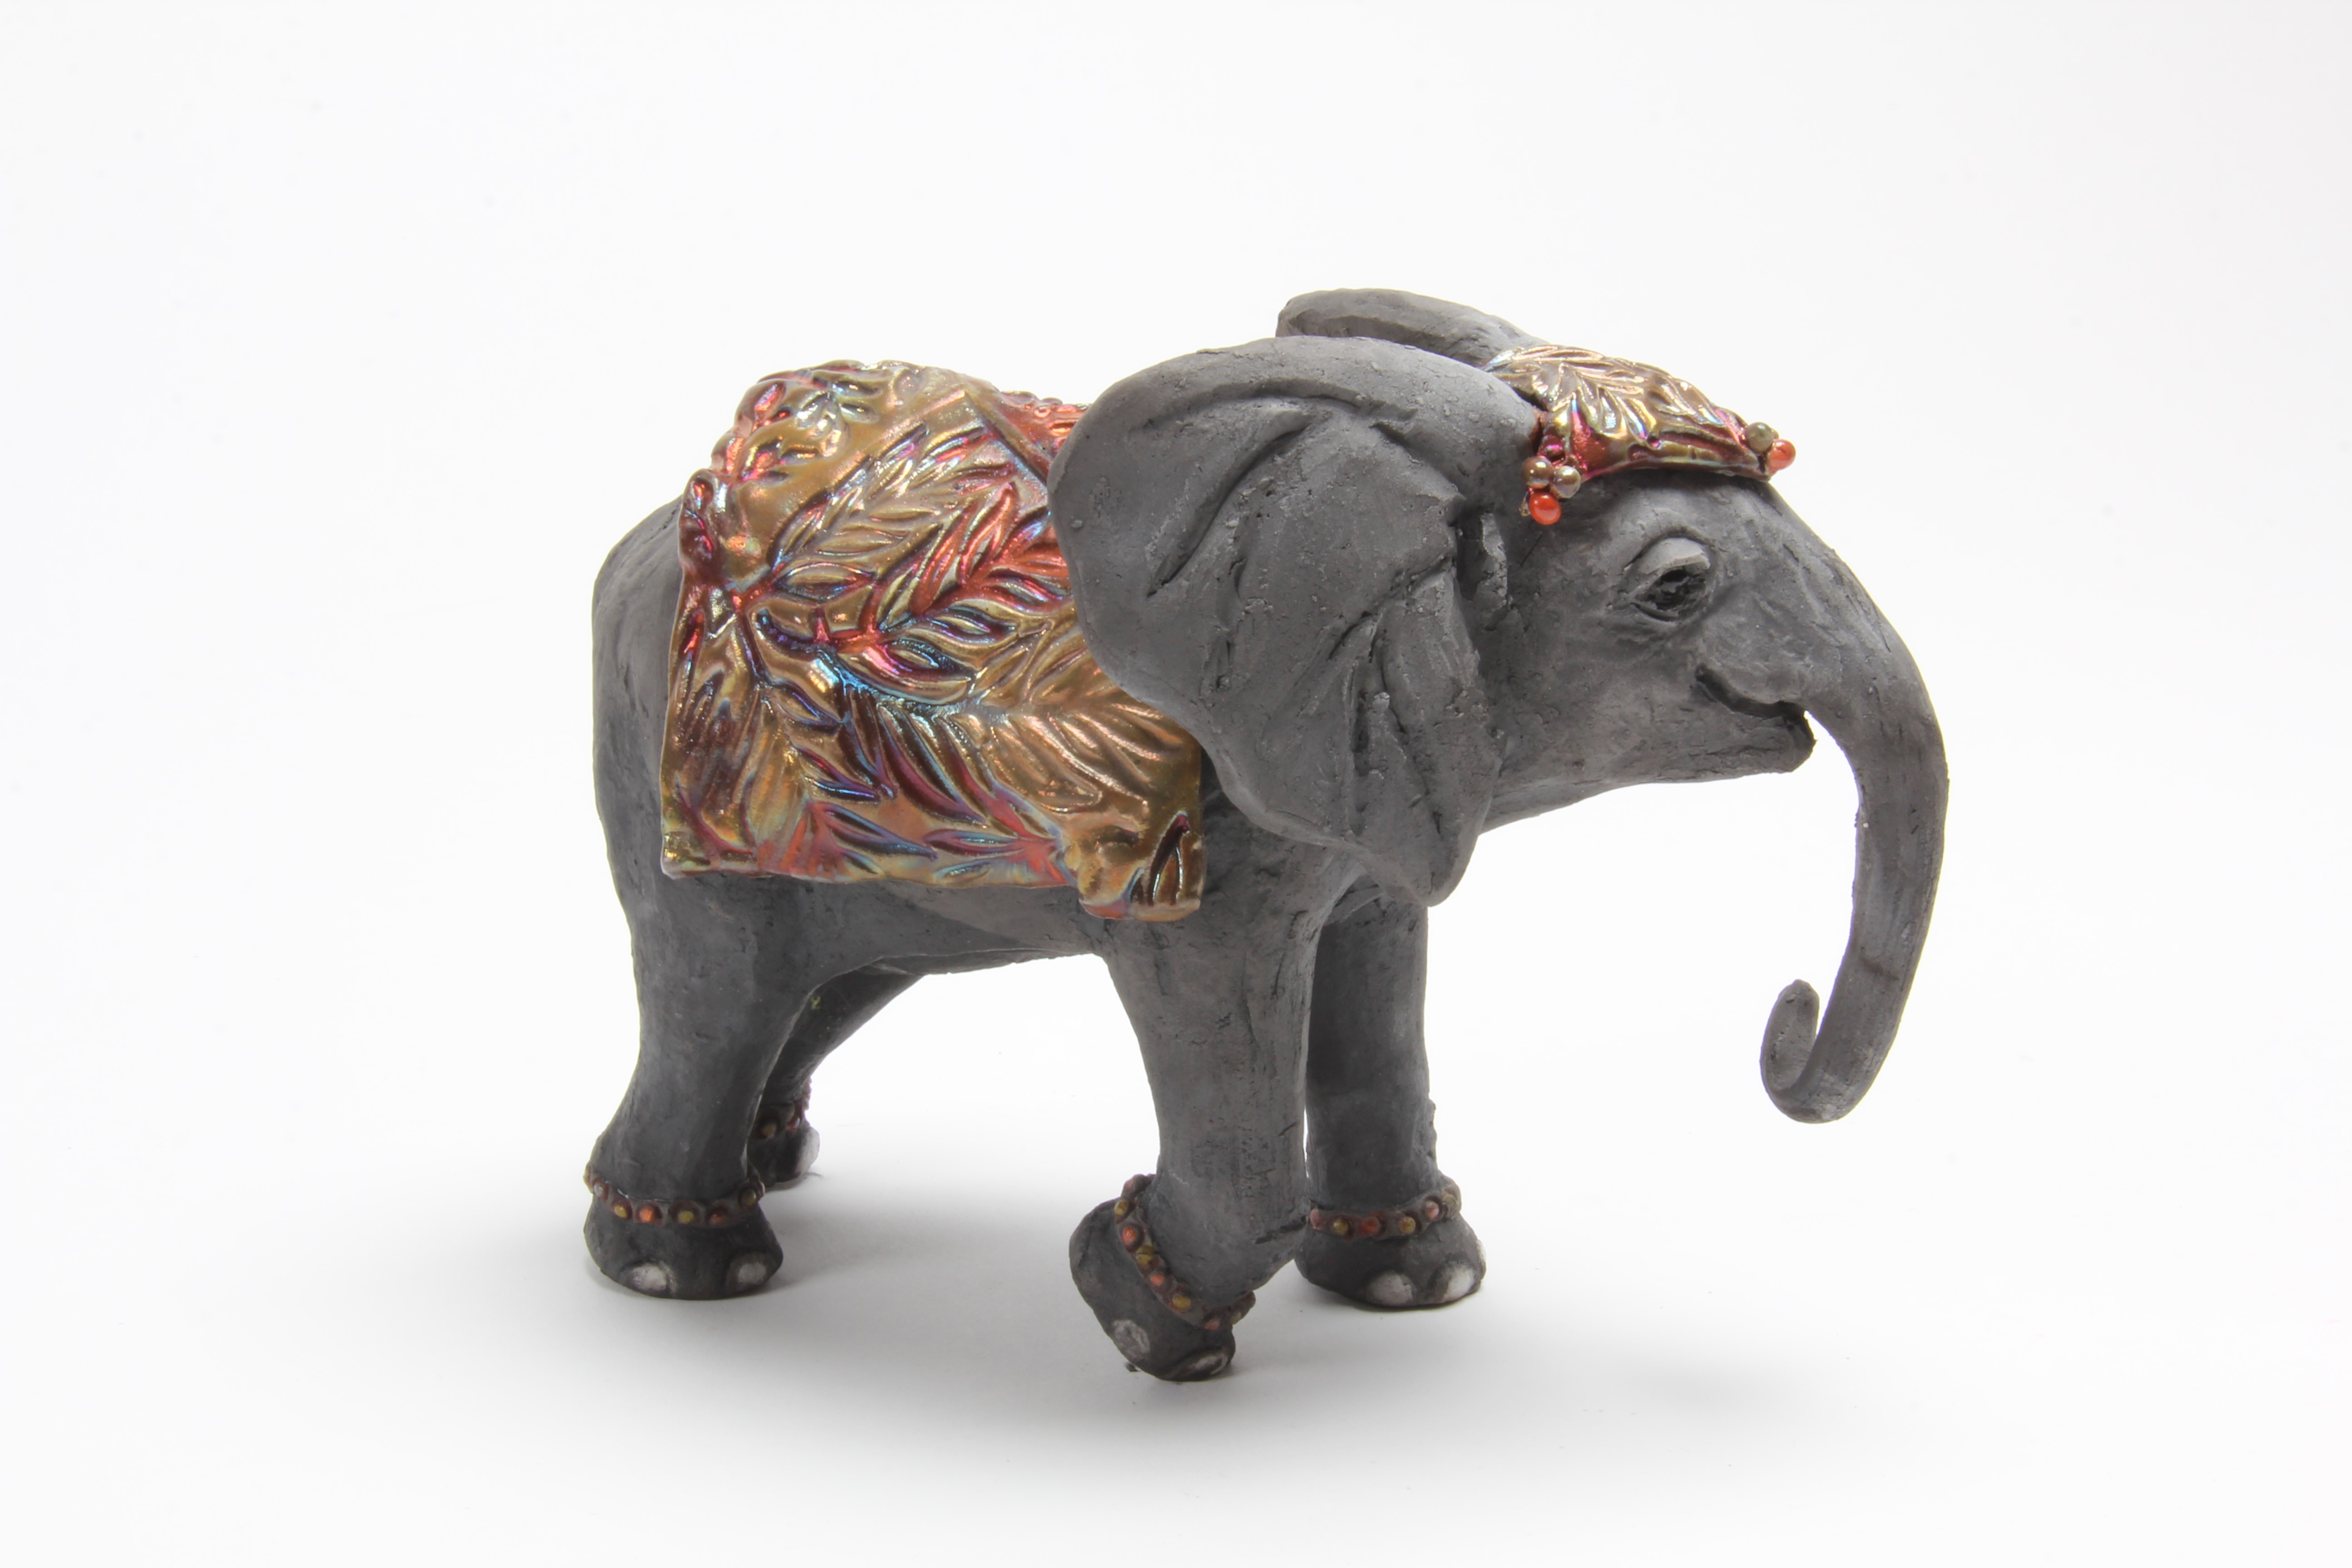 Zsuzsa Monostory: Newborn Elephant with Blanket Product Image 4 of 5